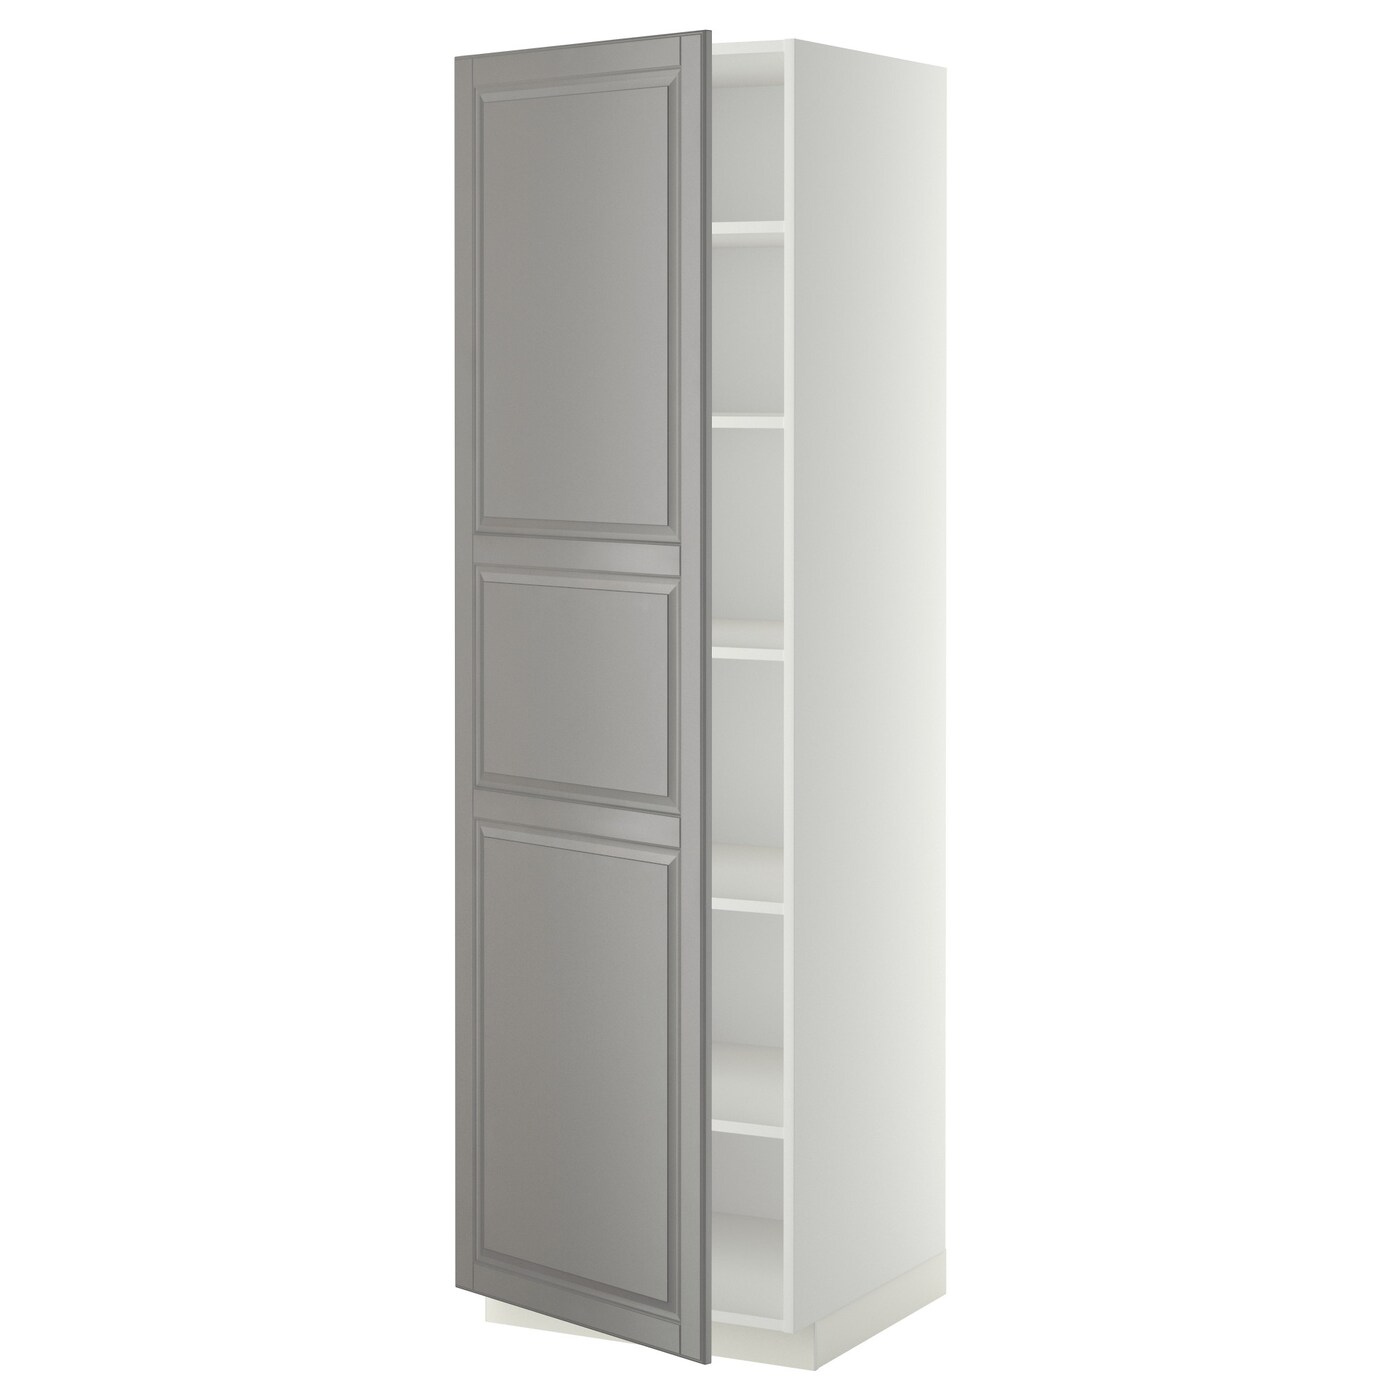 Высокий кухонный шкаф с полками - IKEA METOD/МЕТОД ИКЕА, 200х60х60 см, белый/серый